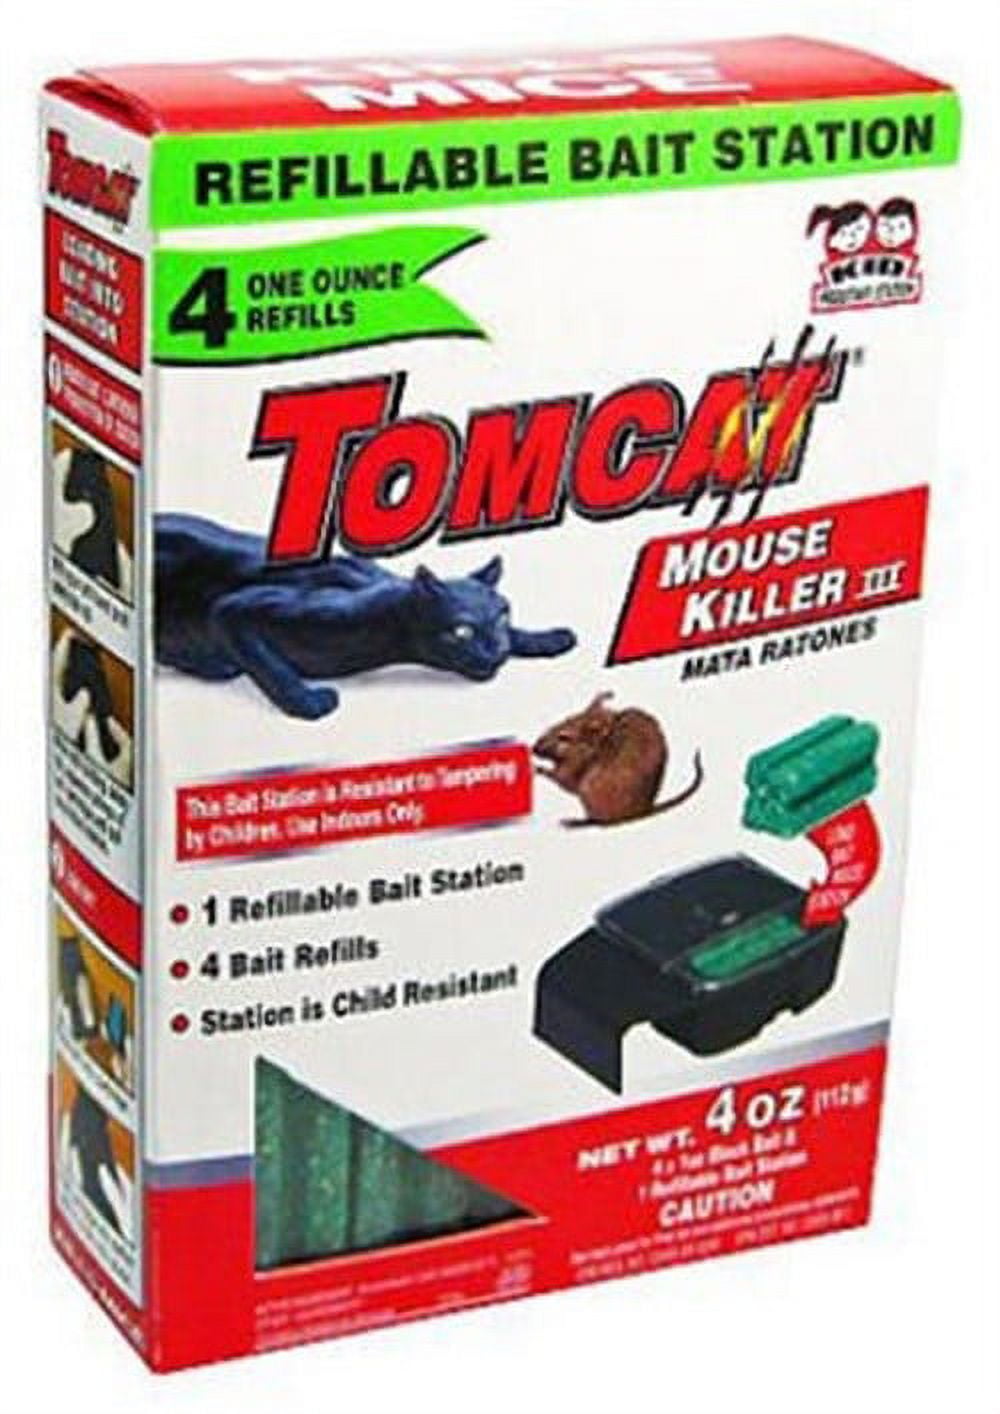 Tomcat Mouse Killer III Refillable Bait Station